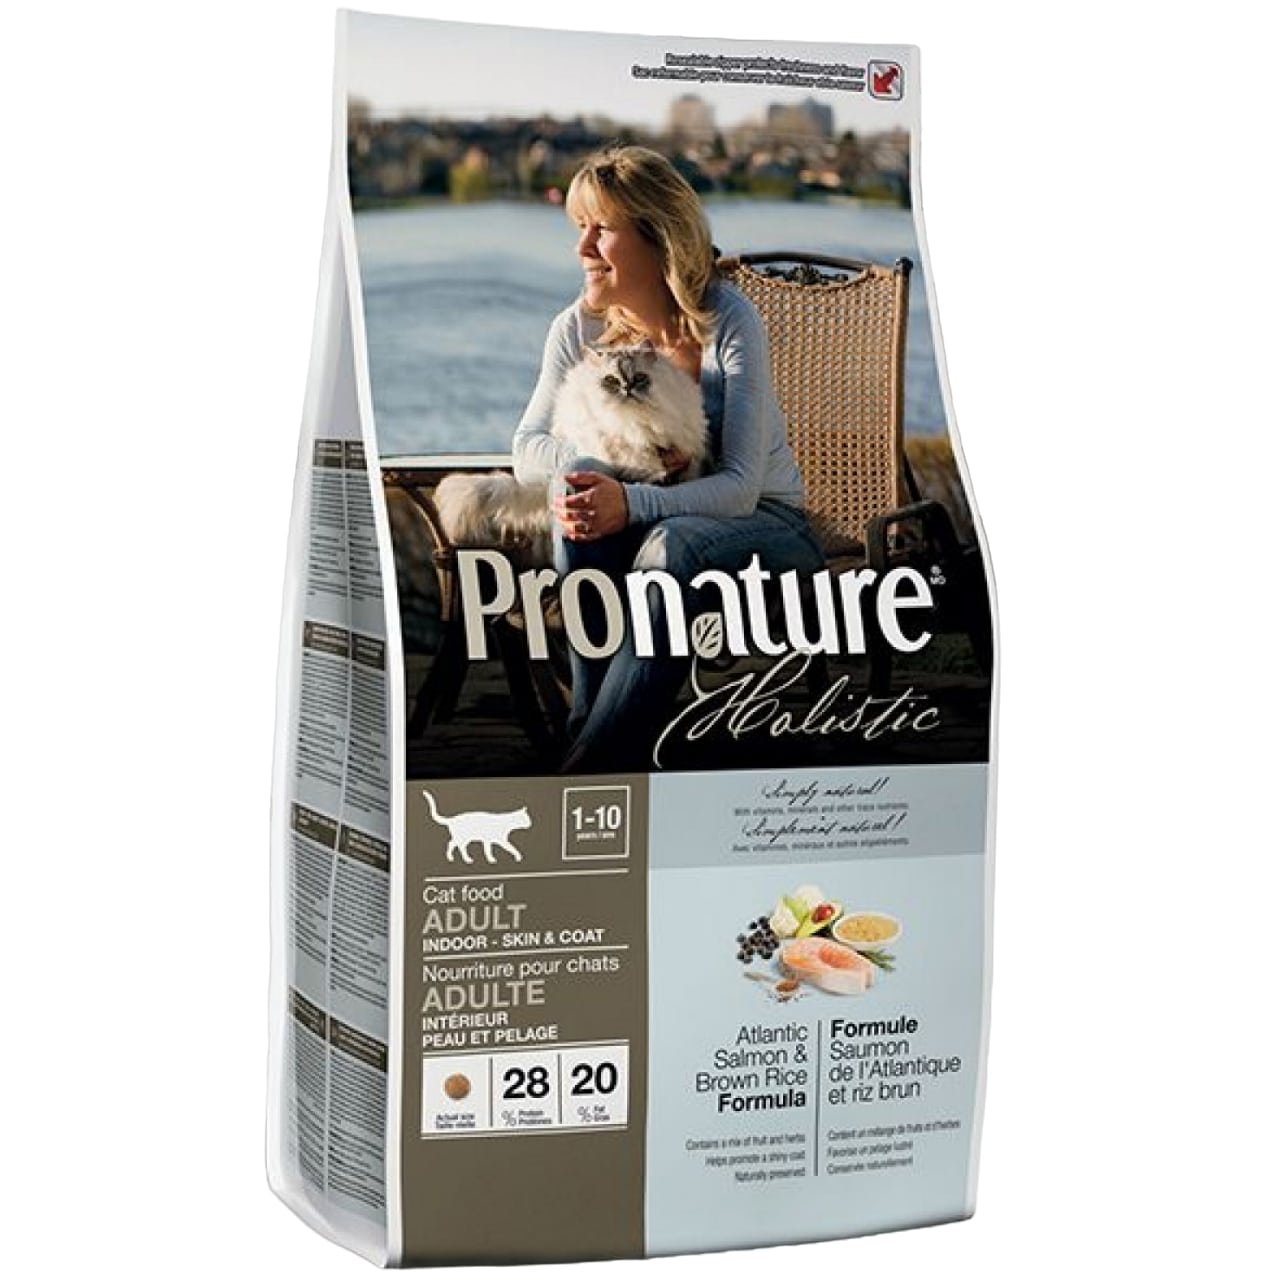 Сухой корм для котов Pronature Holistic Atlantic Salmon & Brown Rice 2.72 кг - фото 1